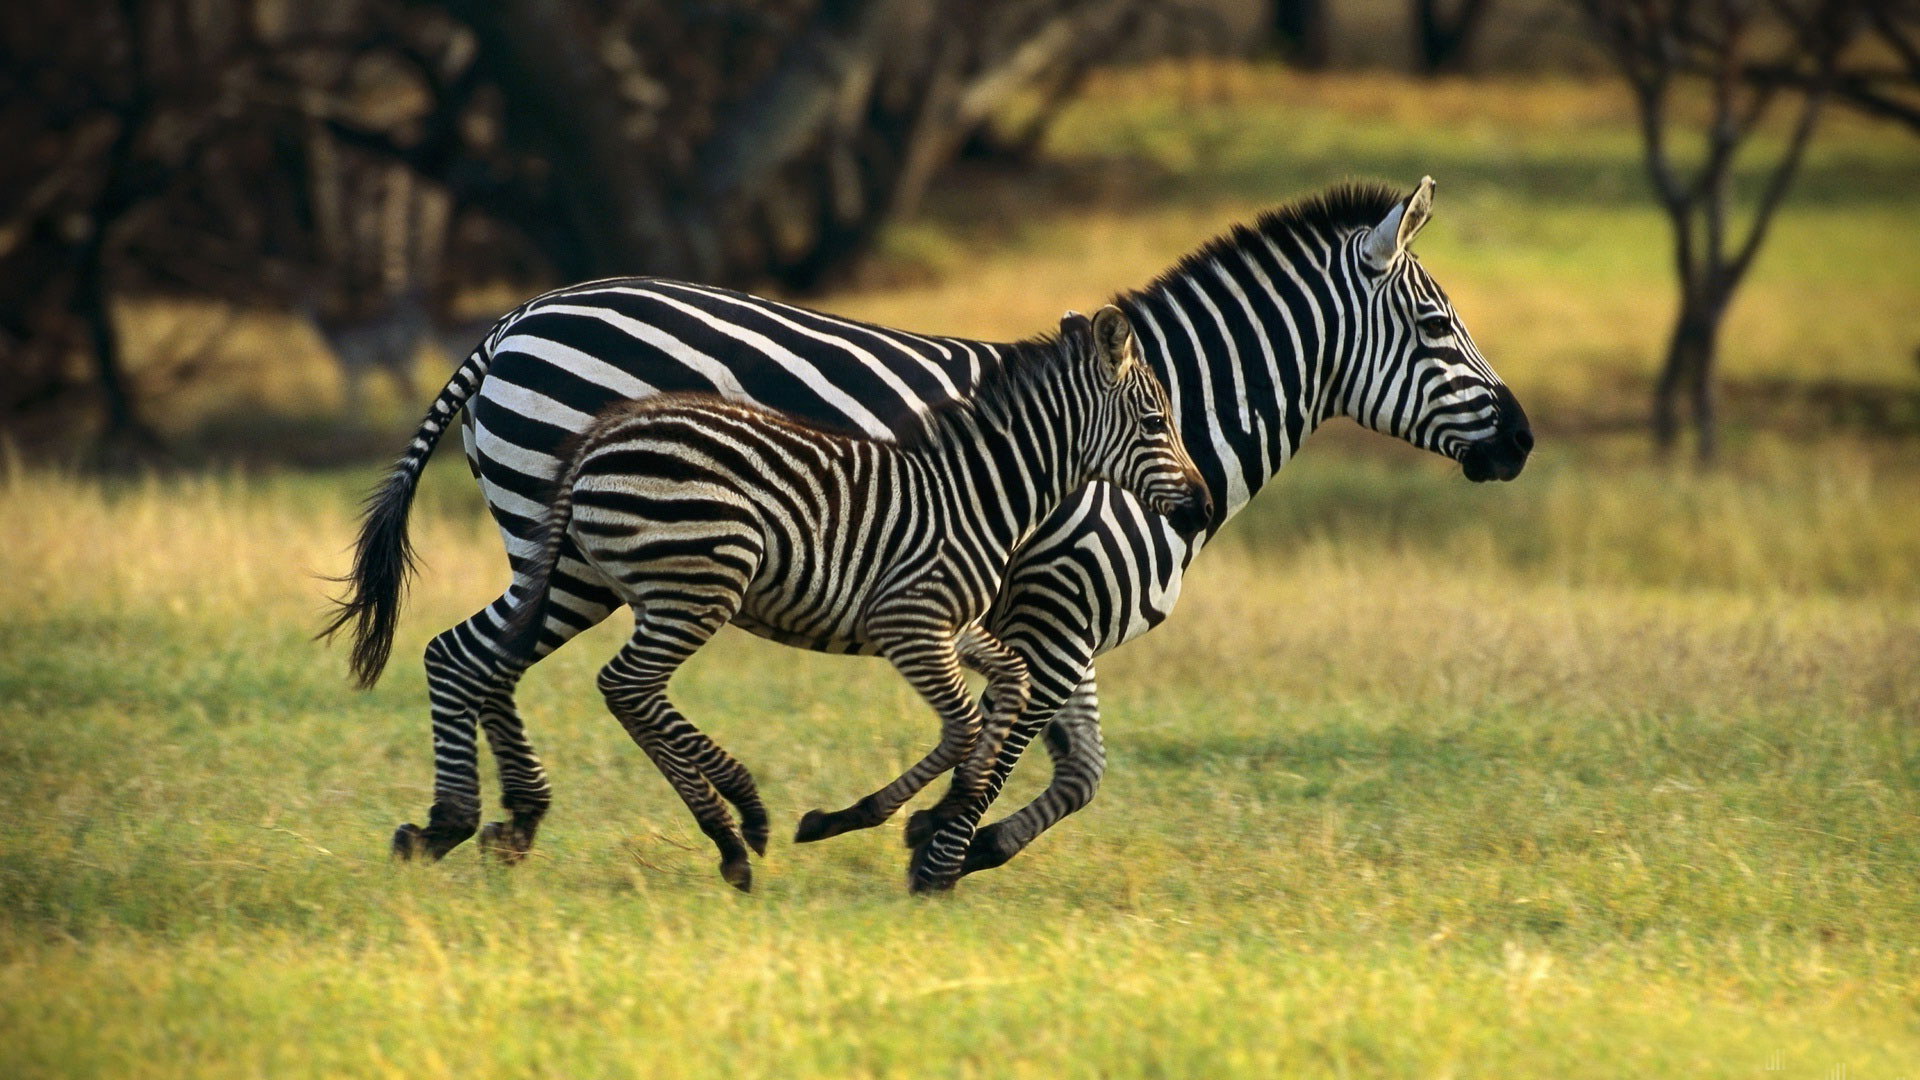 Zebra with baby